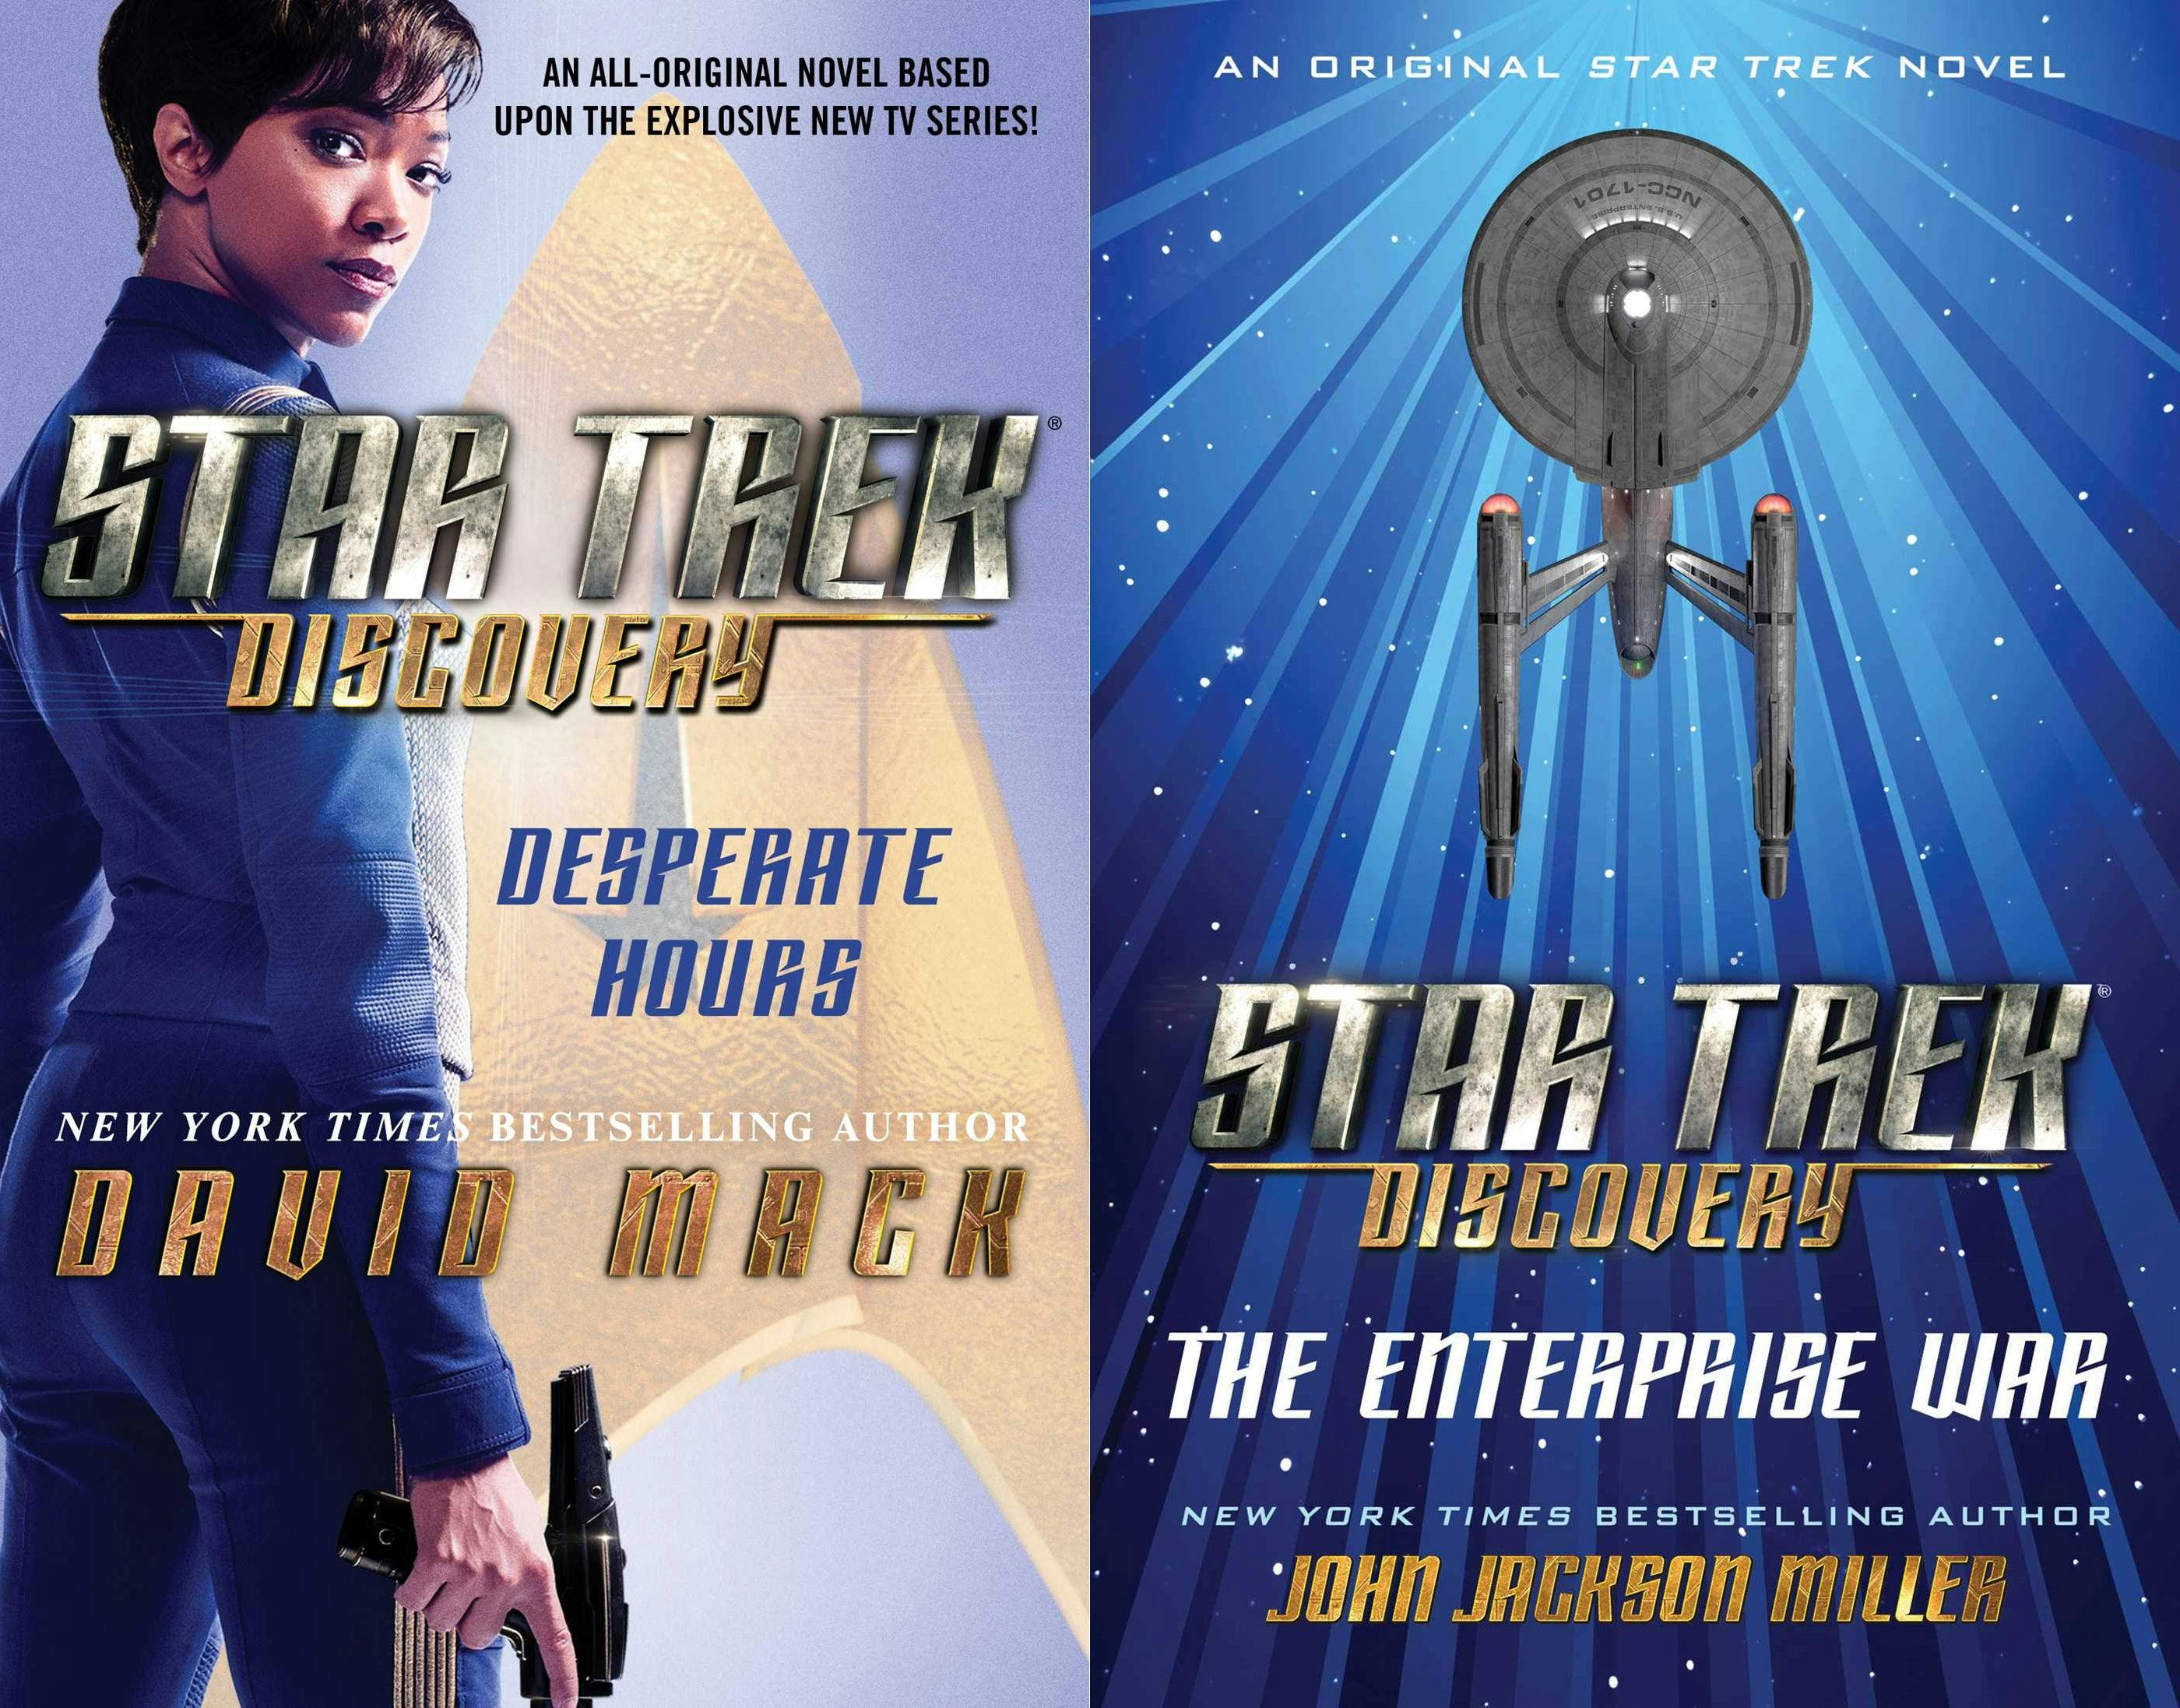 Desperate Hours by David Mack (2017) & The Enterprise War by John Jackson Miller (2019) covers